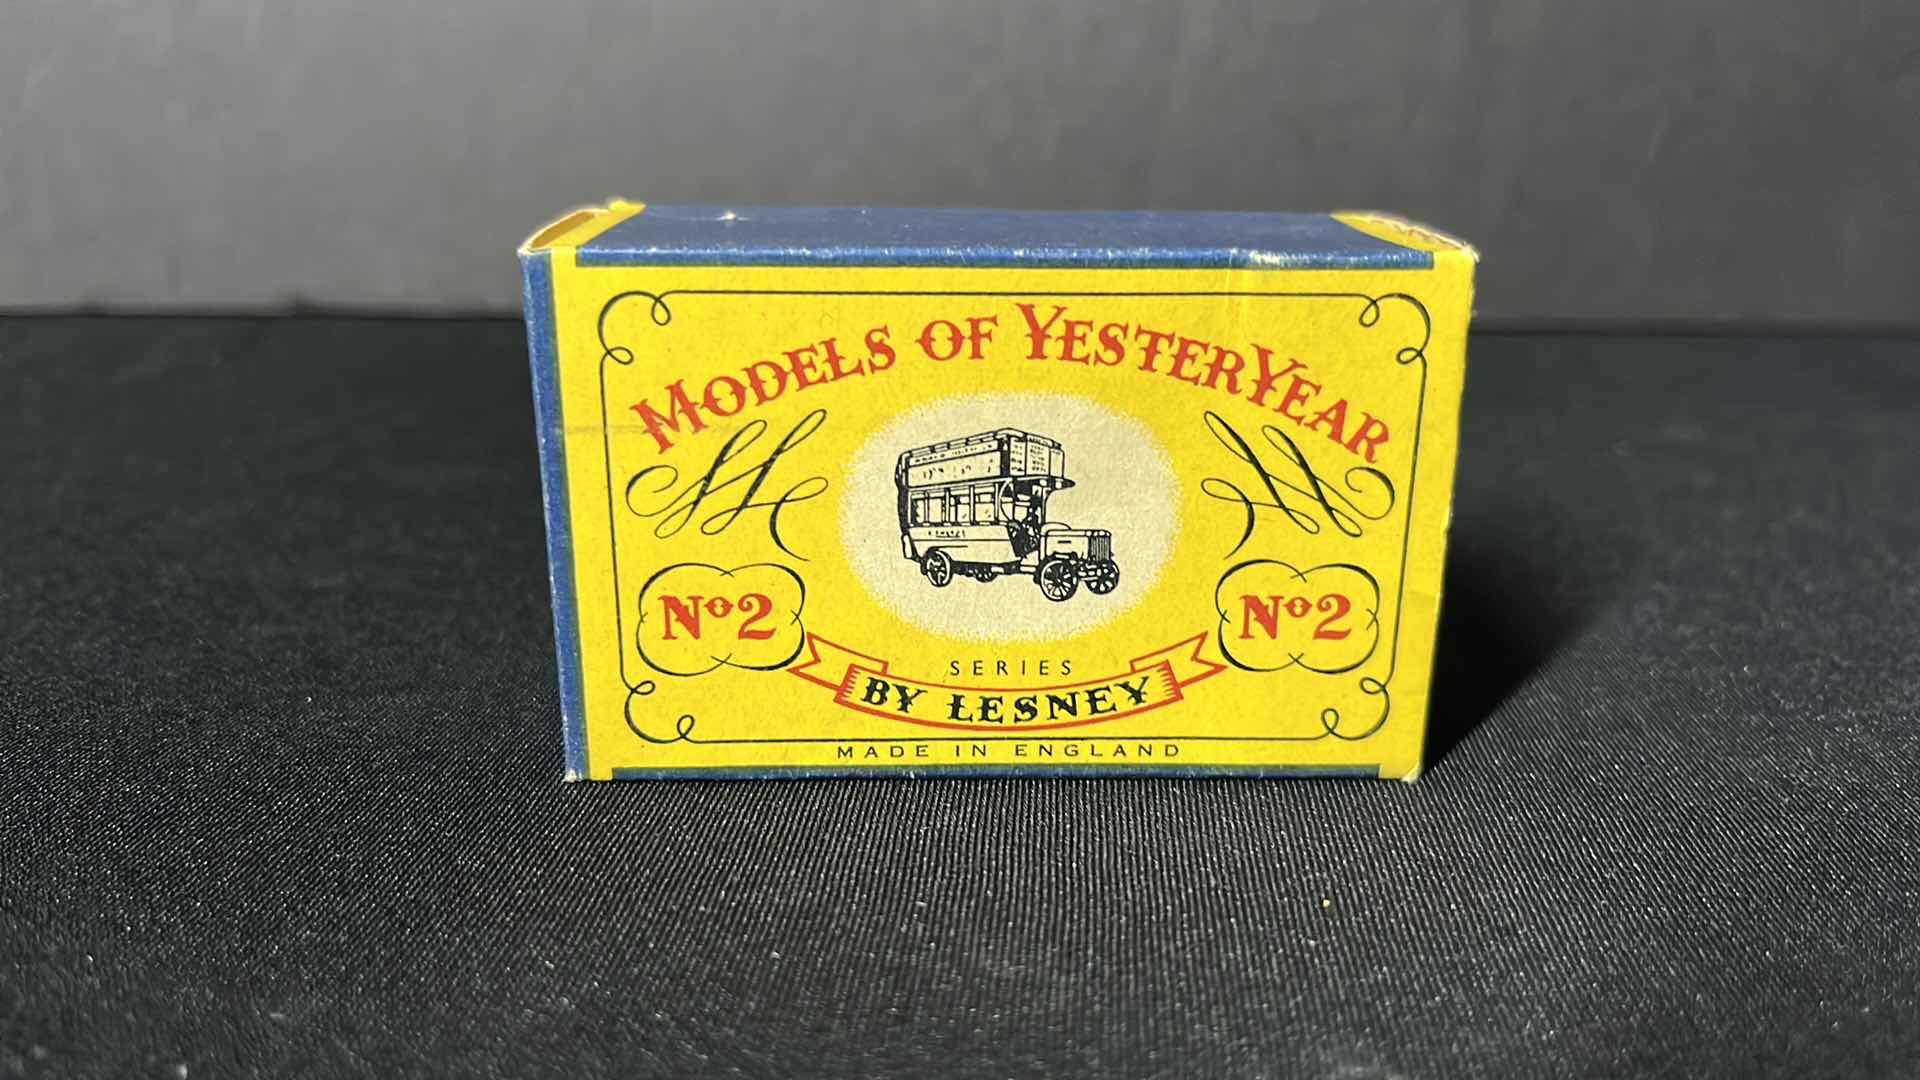 Photo 7 of LESNEY DIE-CAST METAL MODELS OF YESTERYEAR SERIES, NO. 2 SCALE MODEL B TYPE BUS, 1956 - 1961